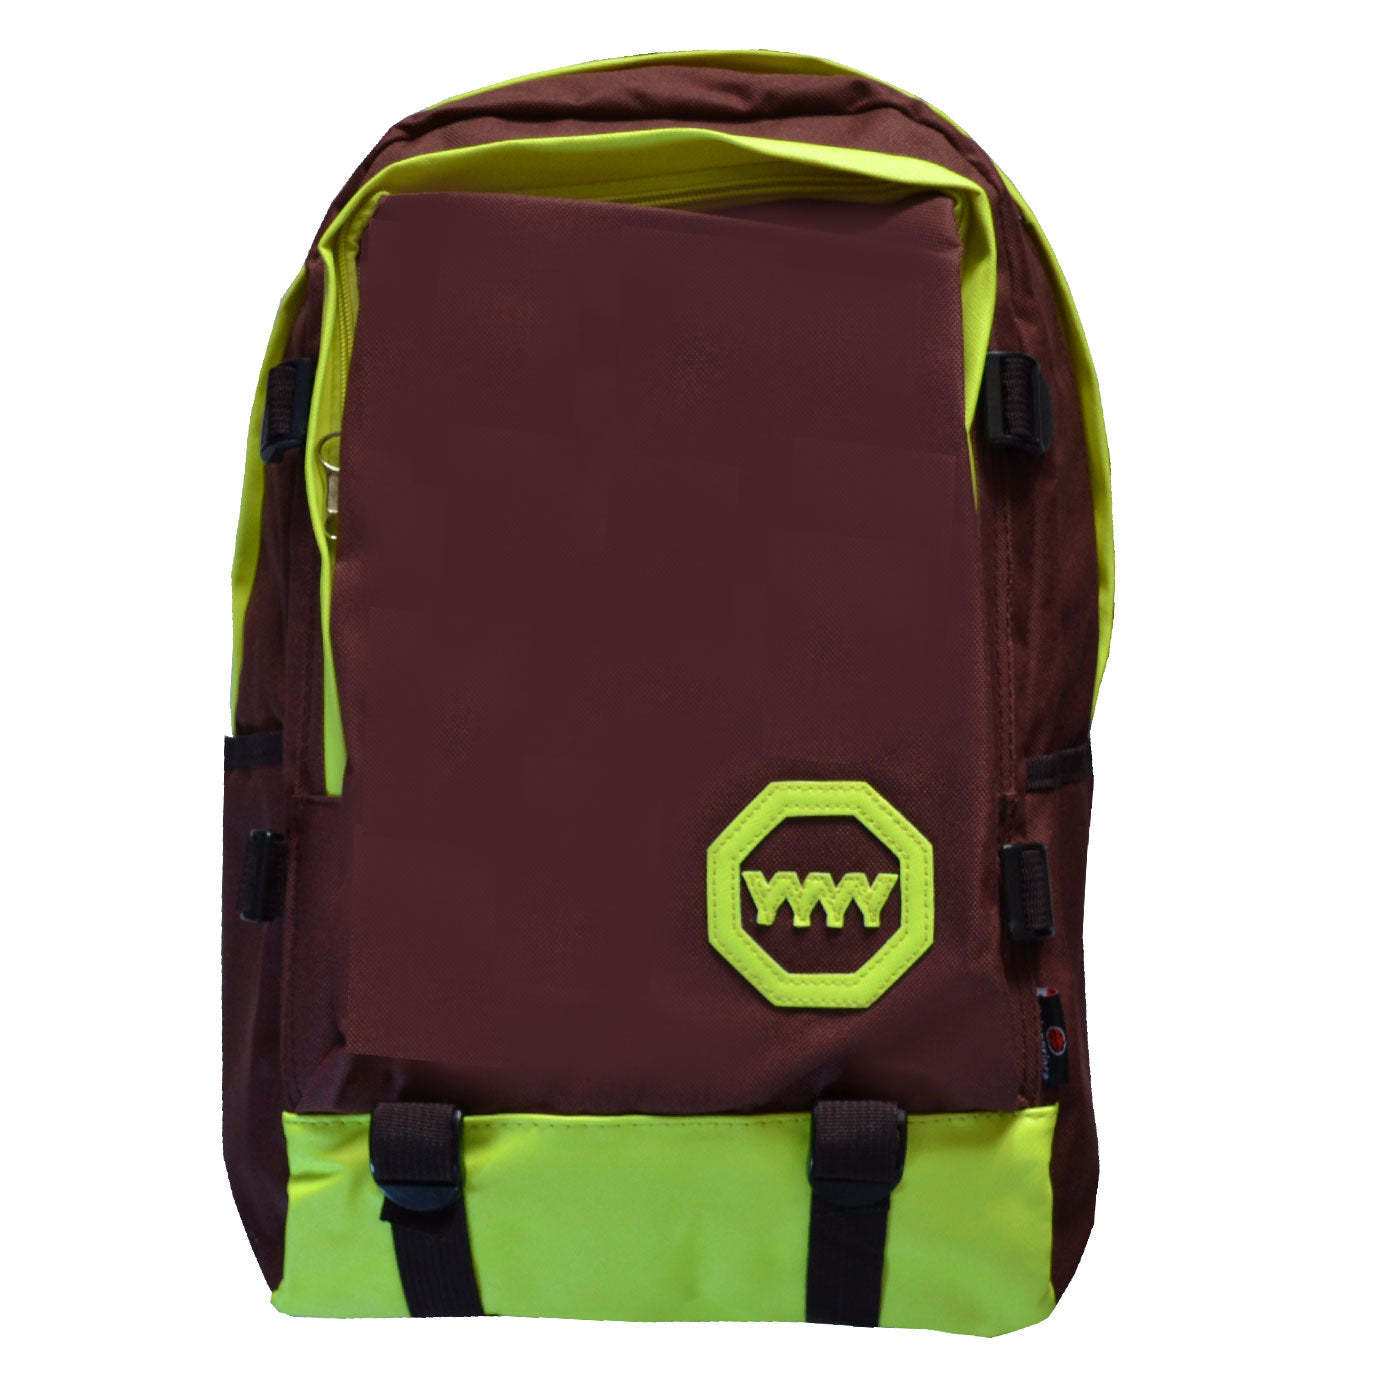 School Bag Backpack with adjustable width